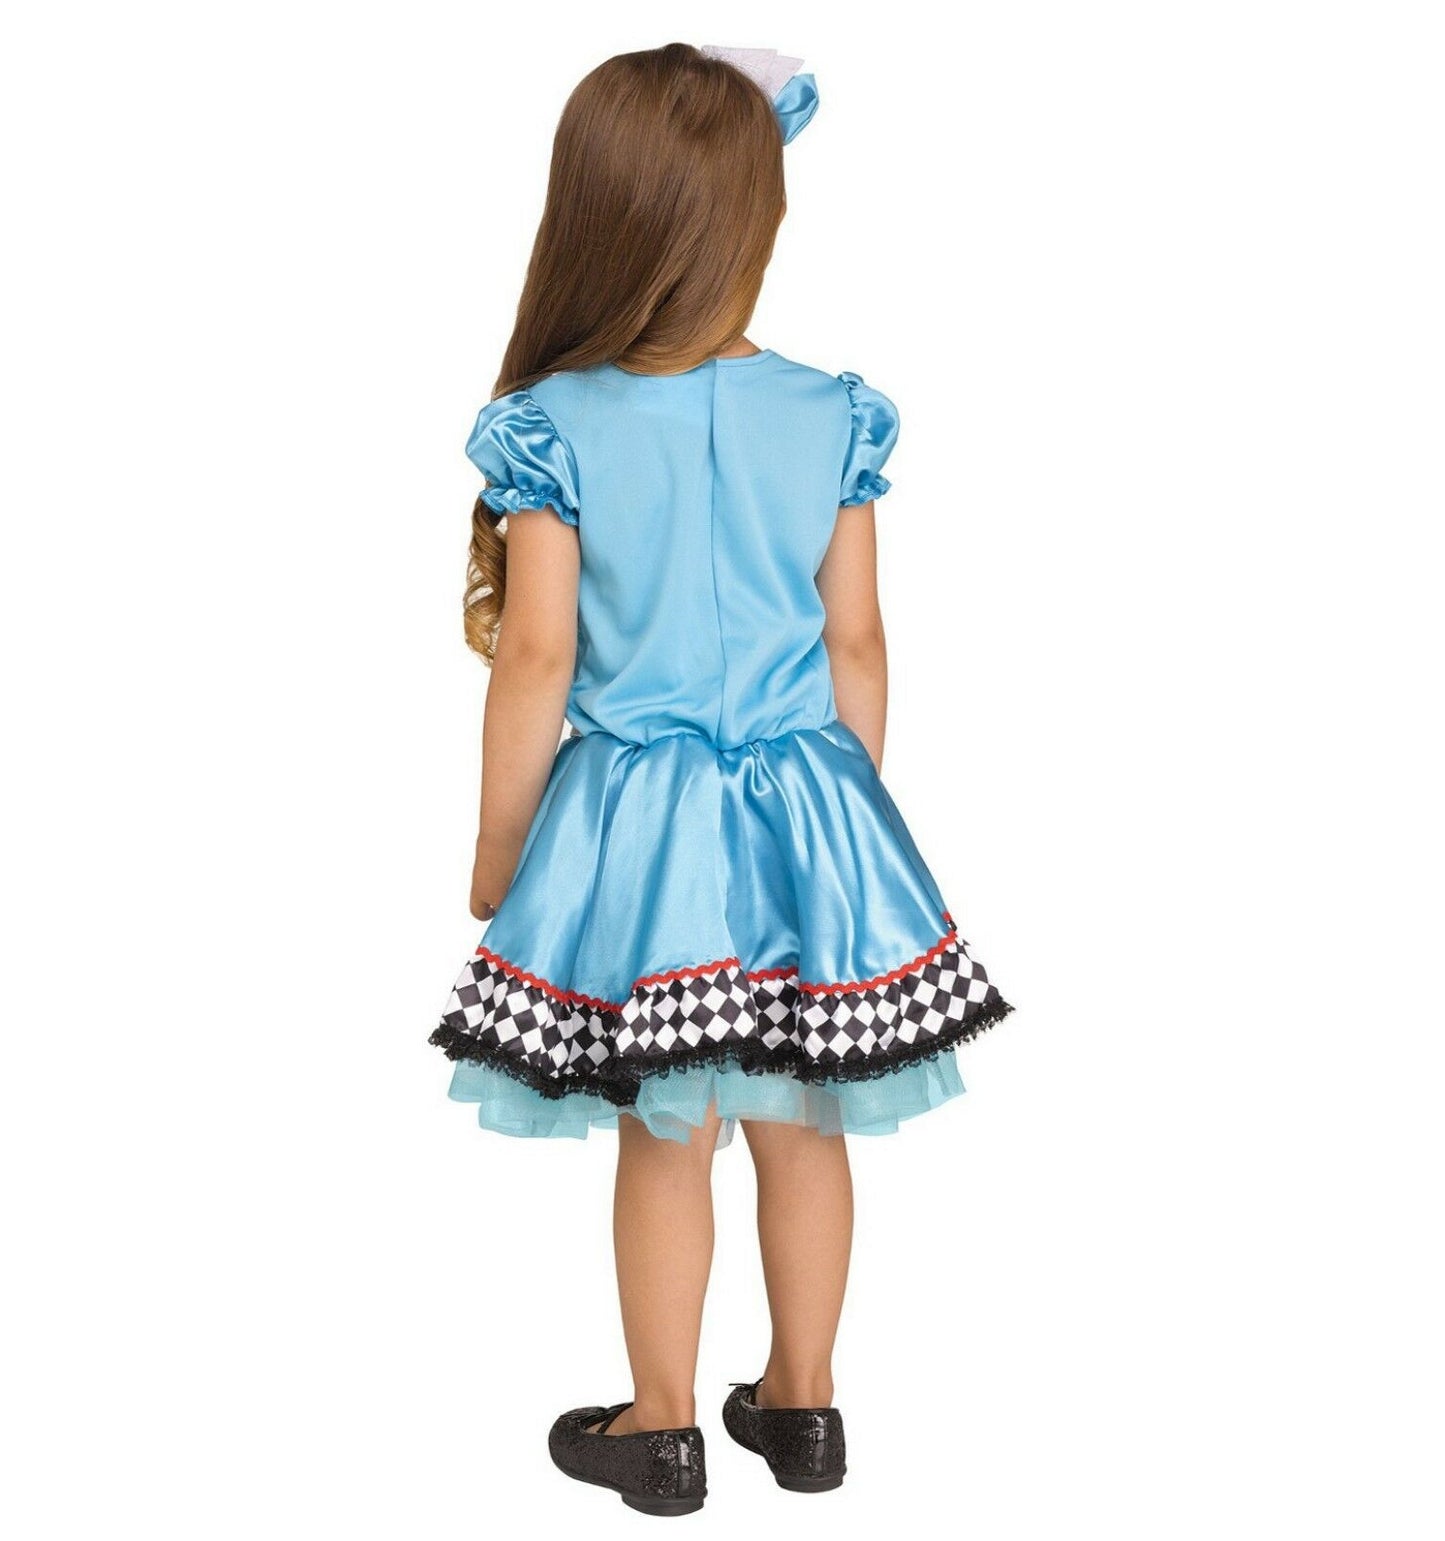 Alice in Wild Wonderland Toddler Costume